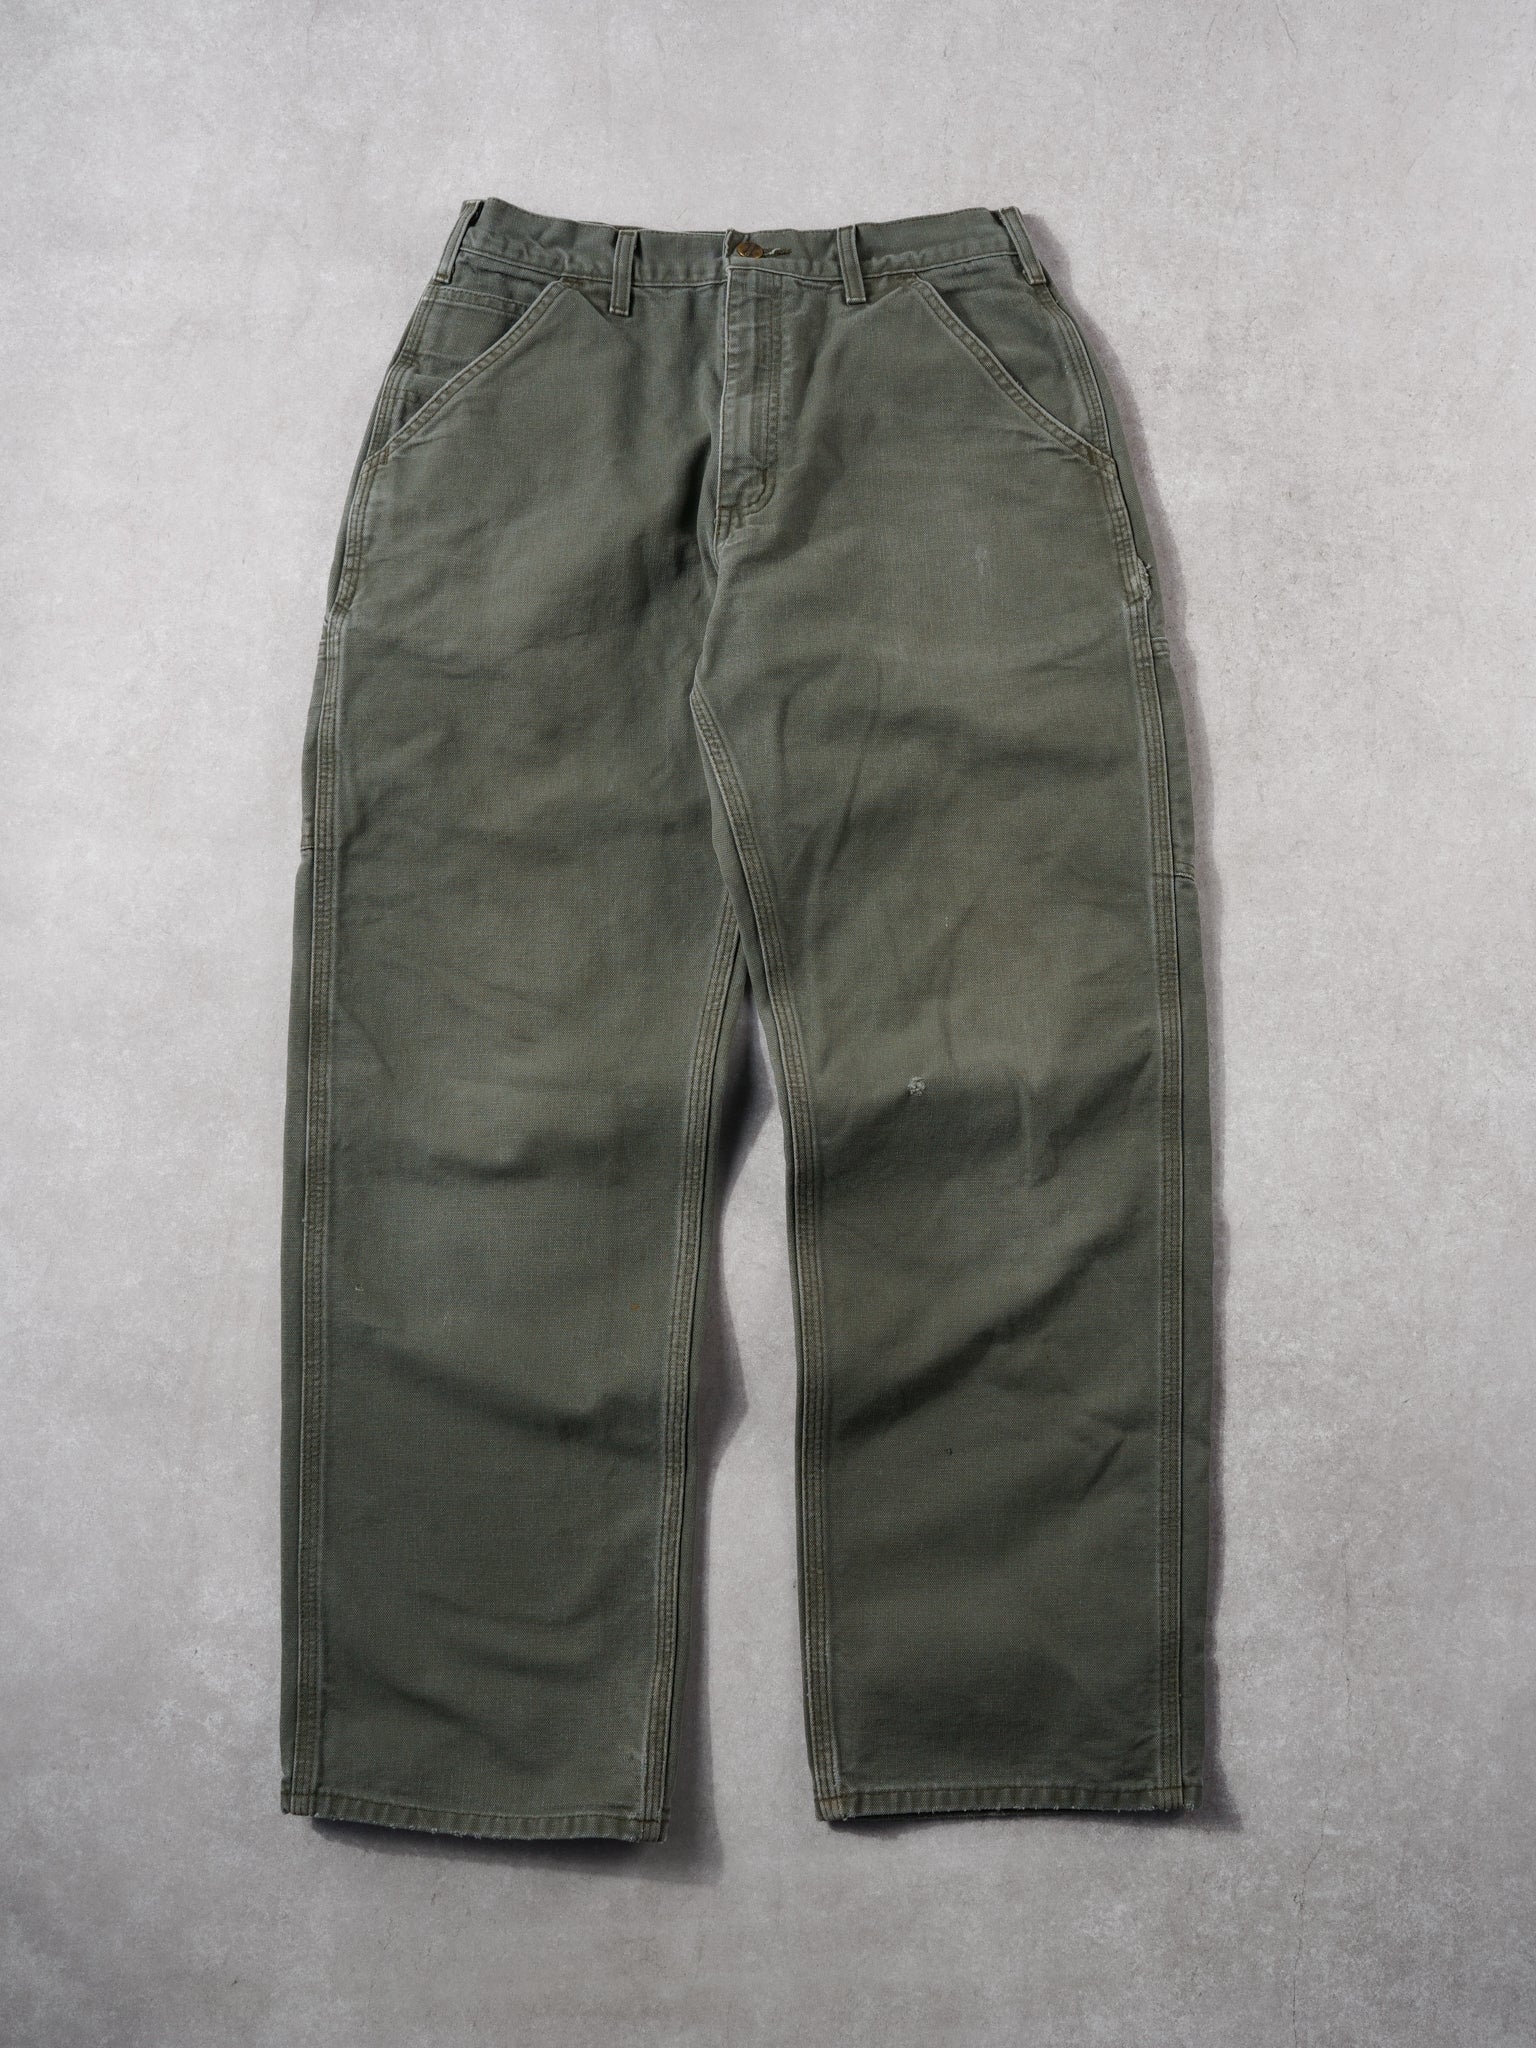 Vintage 90s Juniper Green Carhartt Carpenter Pants (30x31)